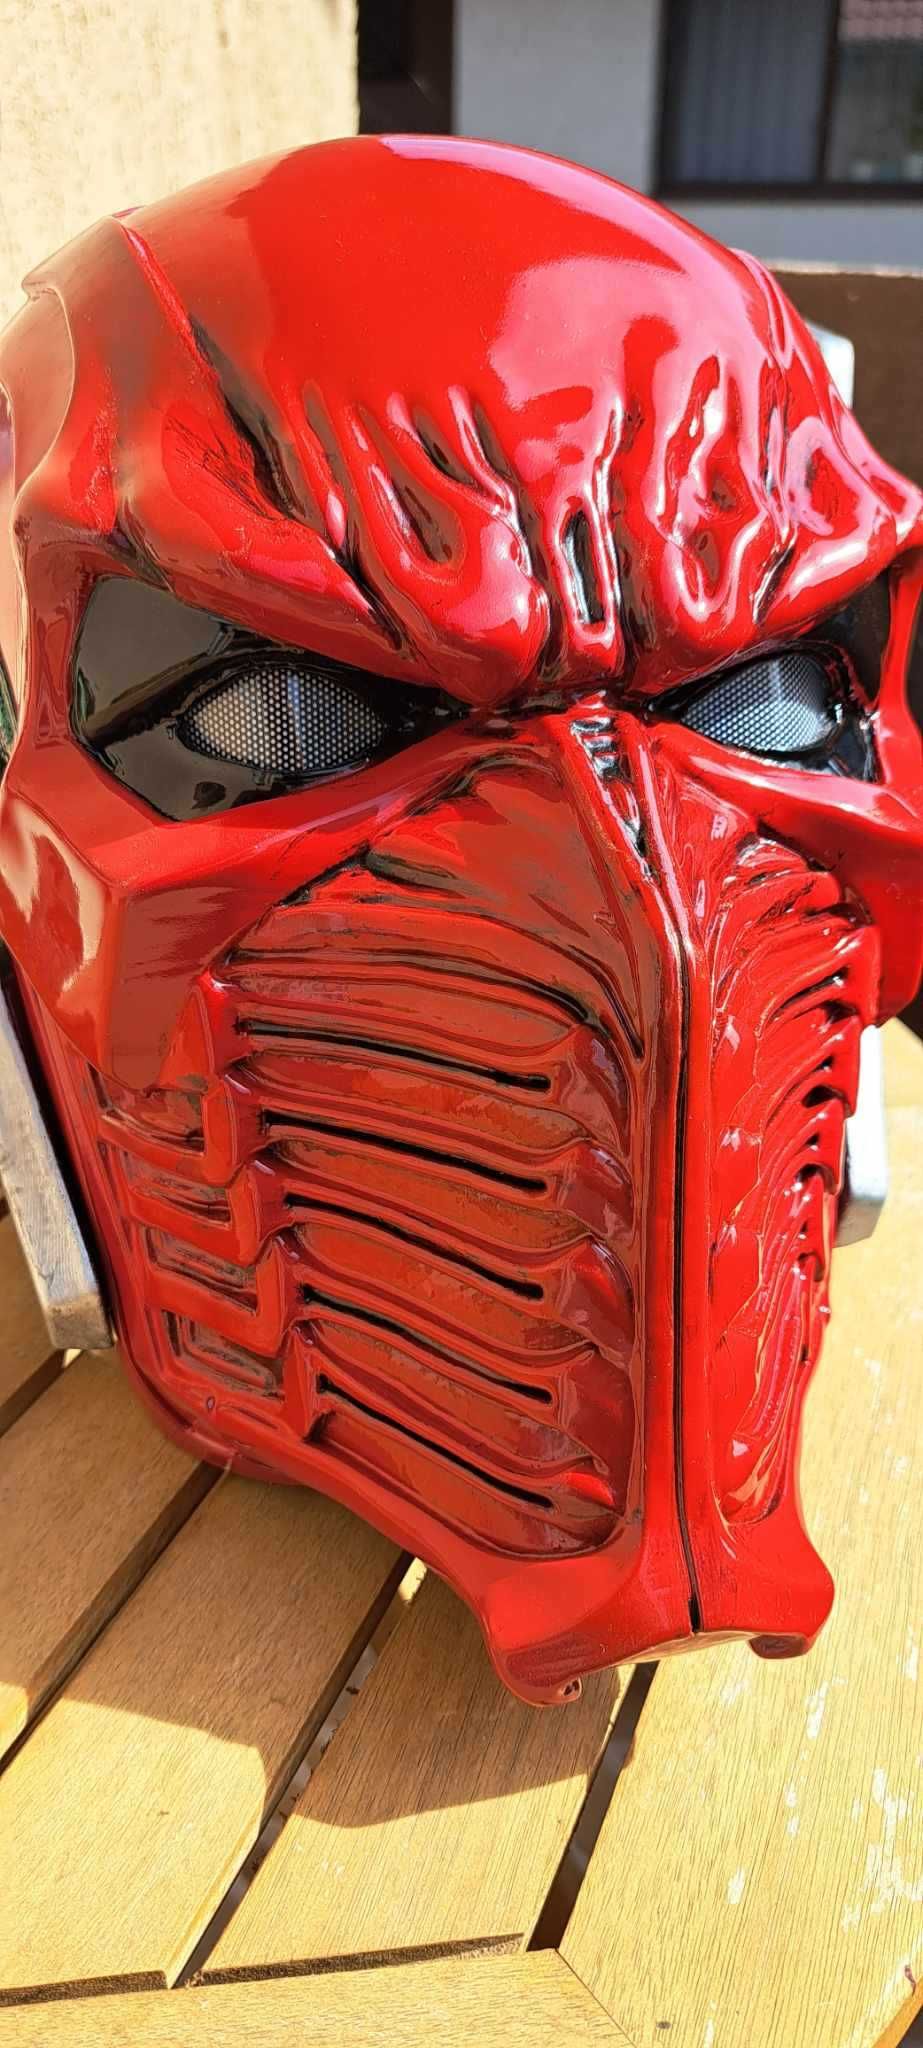 Casca/helmet Red Death 3D print cosplay